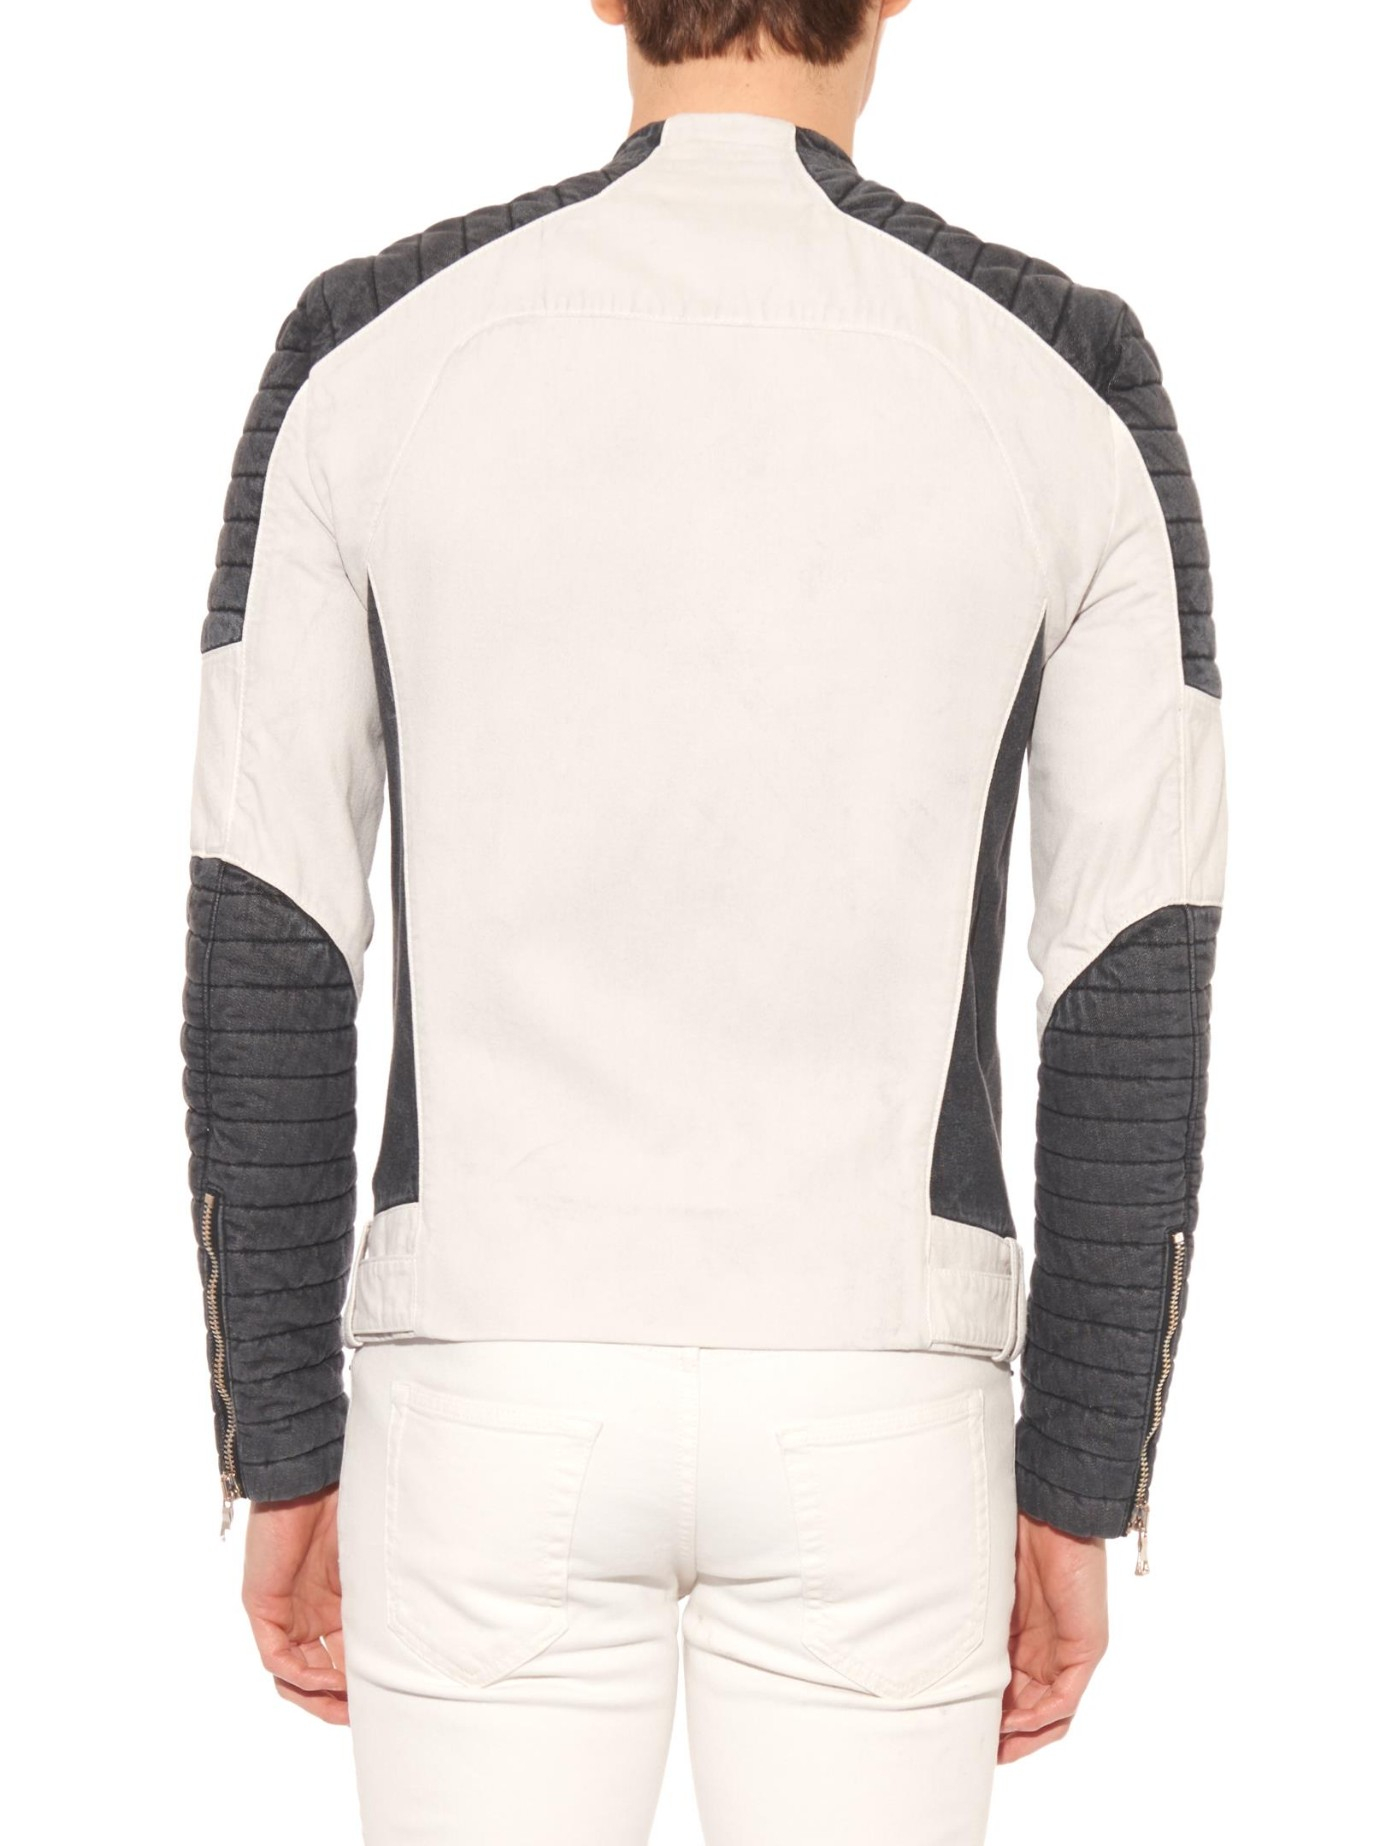 Balmain Bi-Colour Cotton Biker Jacket in White Black (White) for 